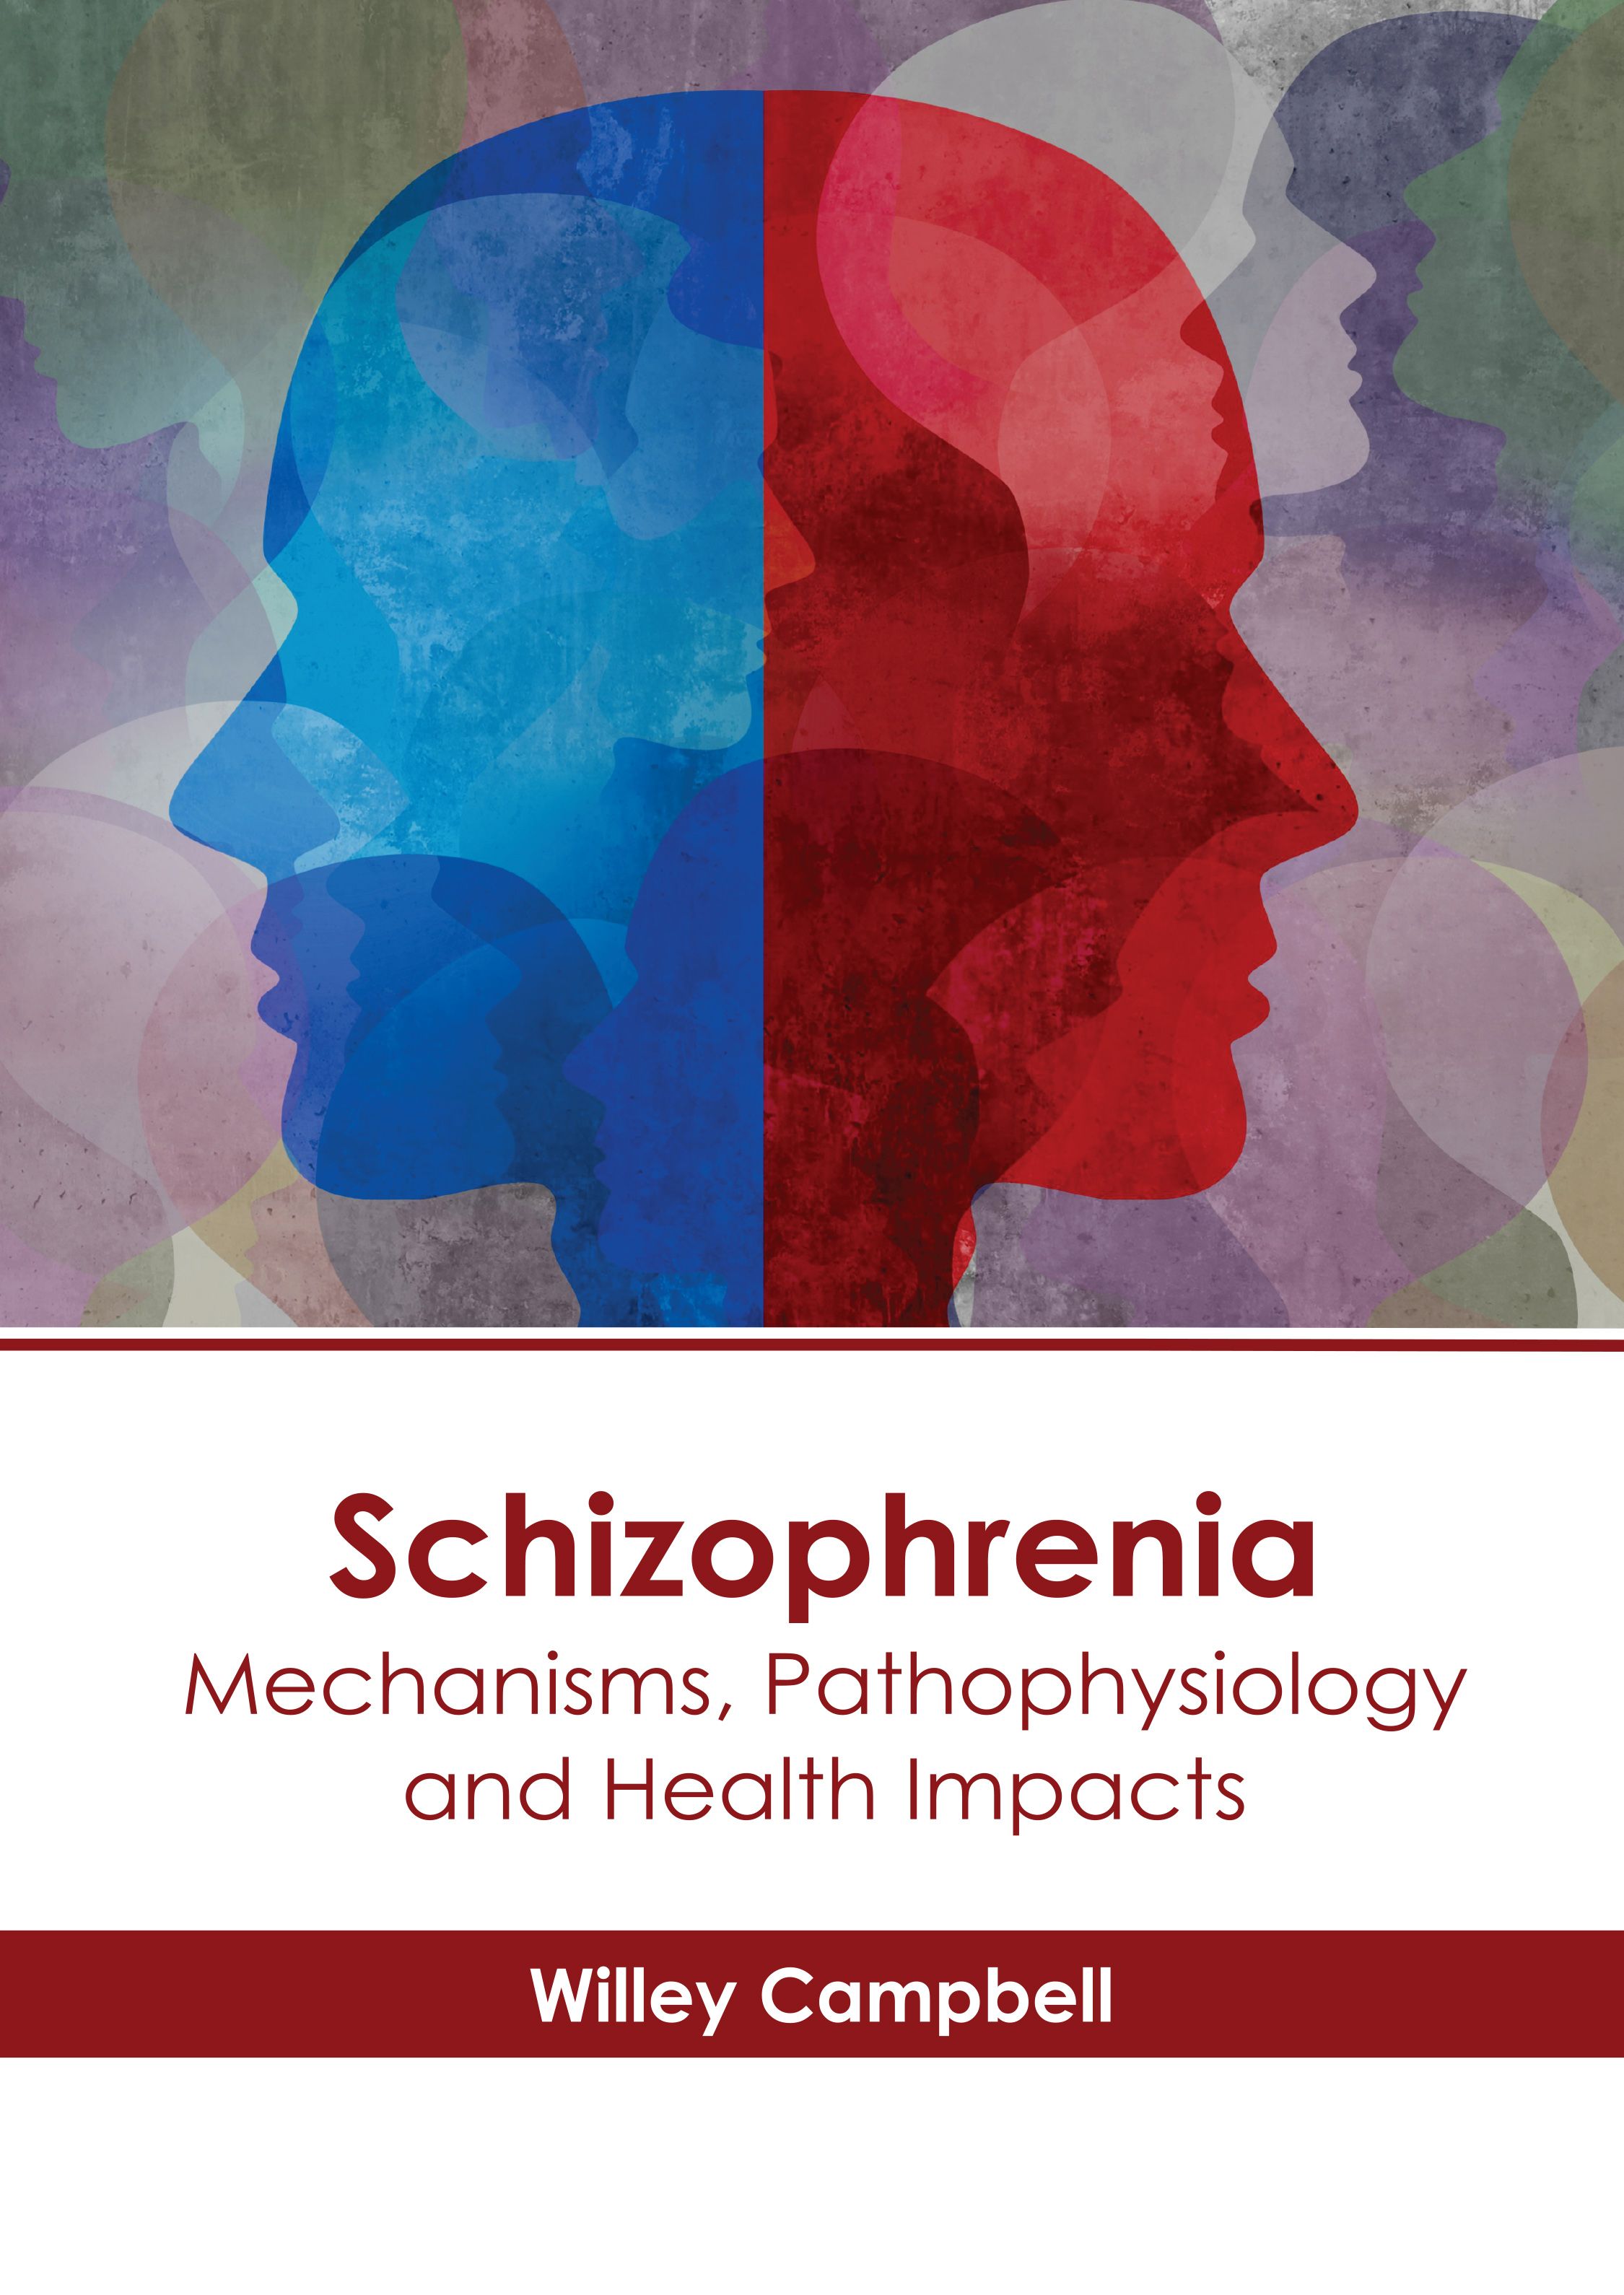 SCHIZOPHRENIA: MECHANISMS, PATHOPHYSIOLOGY AND HEALTH IMPACTS